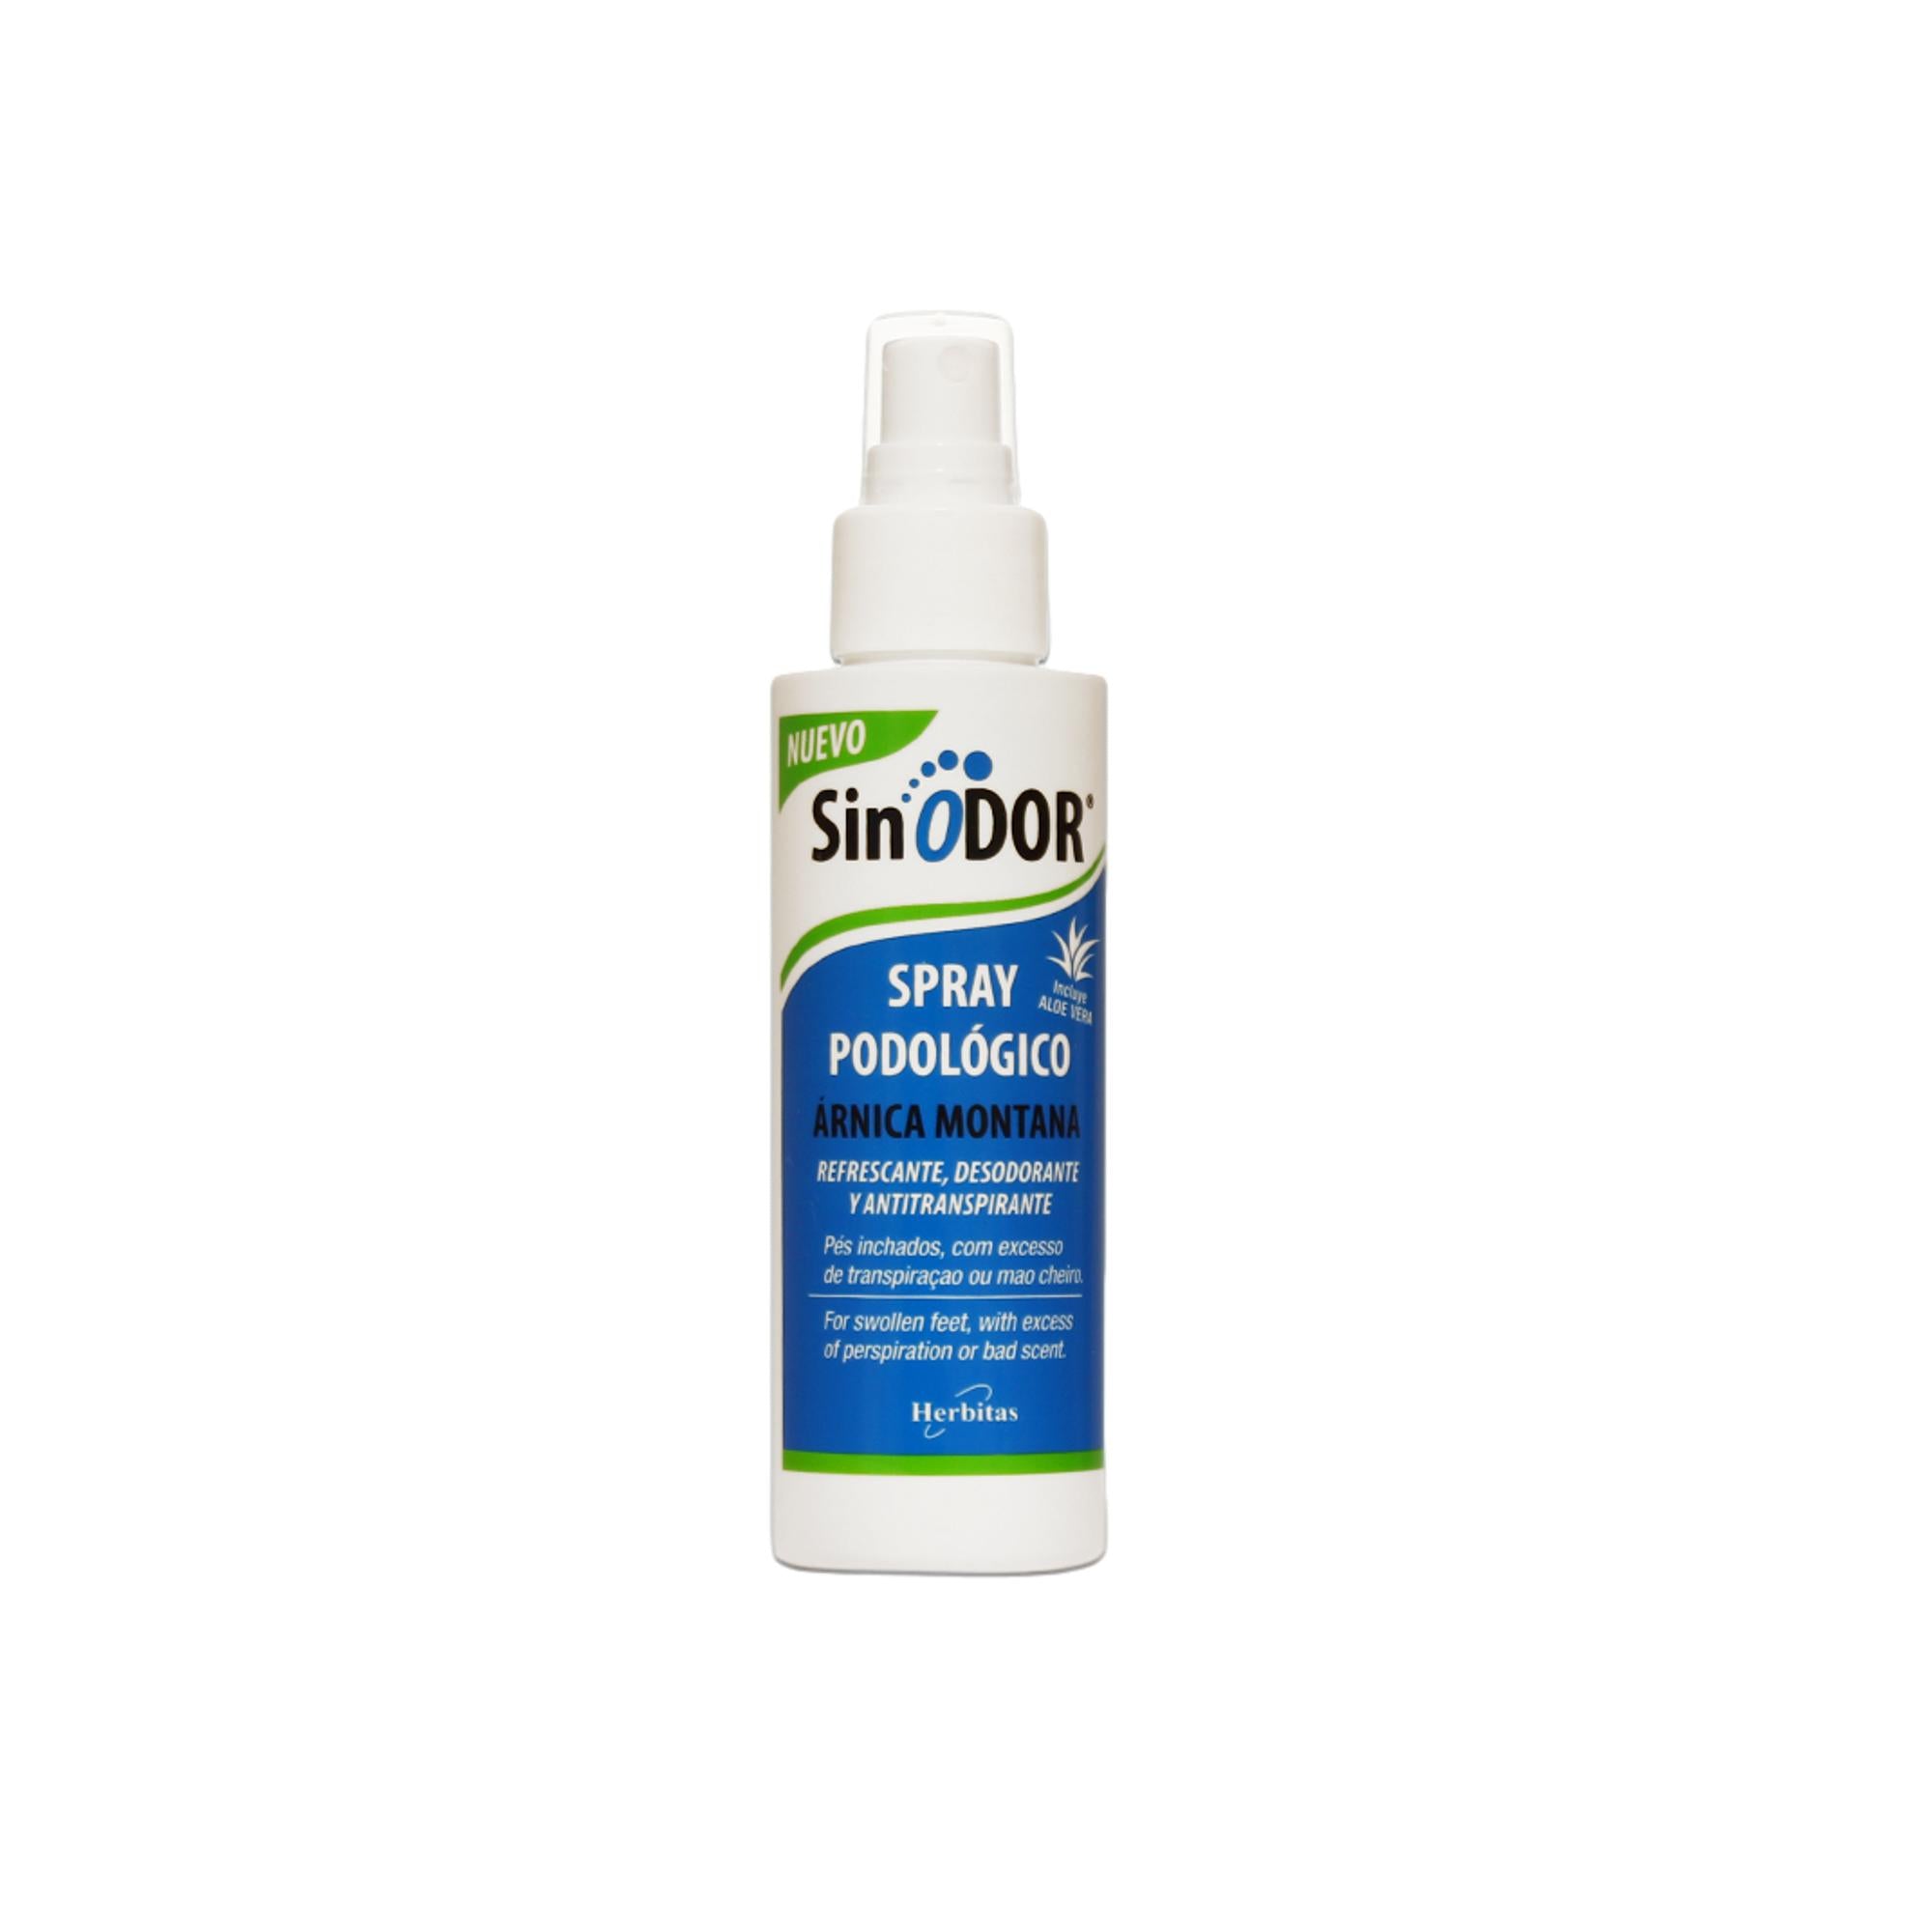 Spray Podologique SinODOR - 100 ml - Herbitas